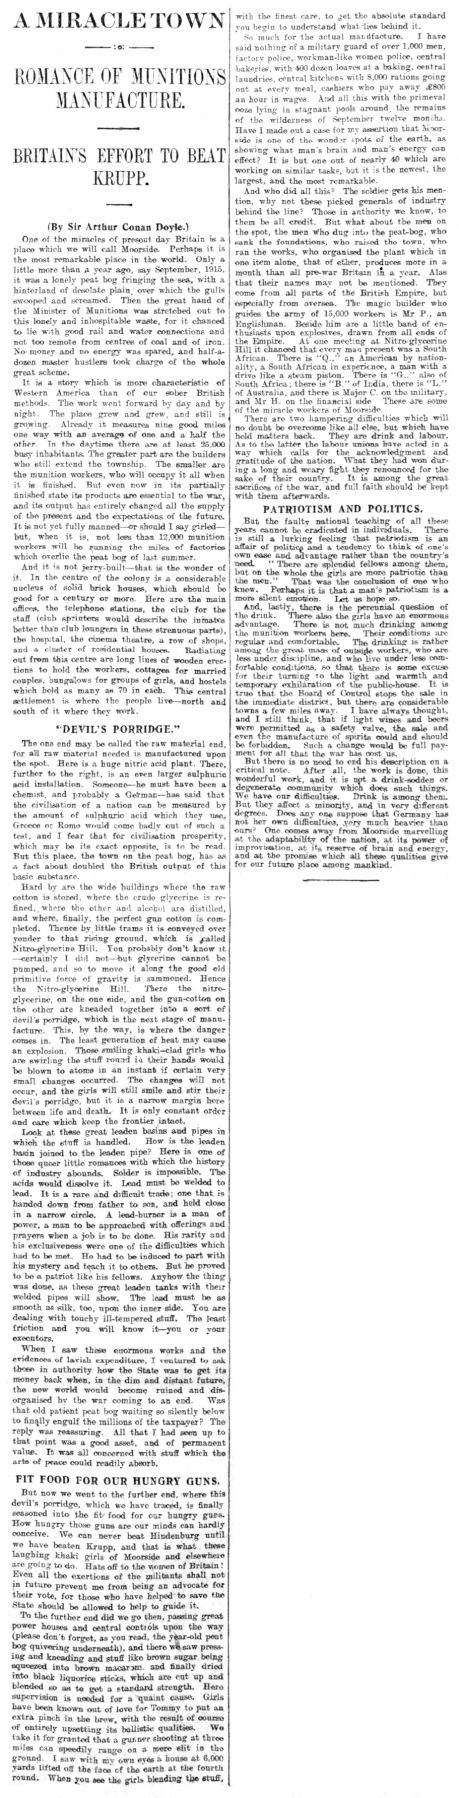 Newcastle Daily Journal (28 november 1916, p. 5)